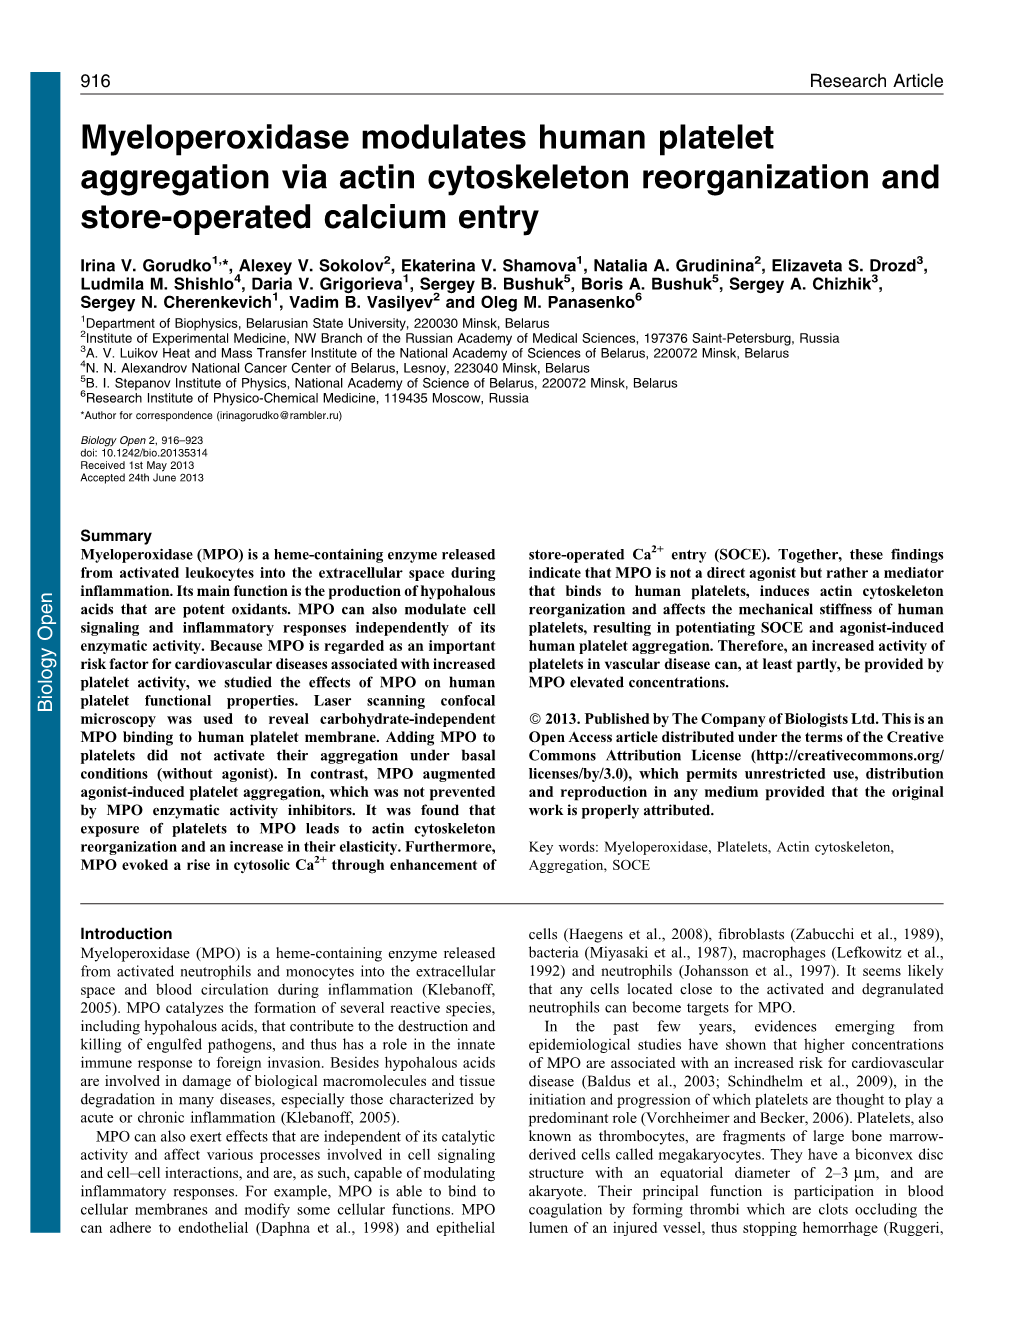 Myeloperoxidase Modulates Human Platelet Aggregation Via Actin Cytoskeleton Reorganization and Store-Operated Calcium Entry